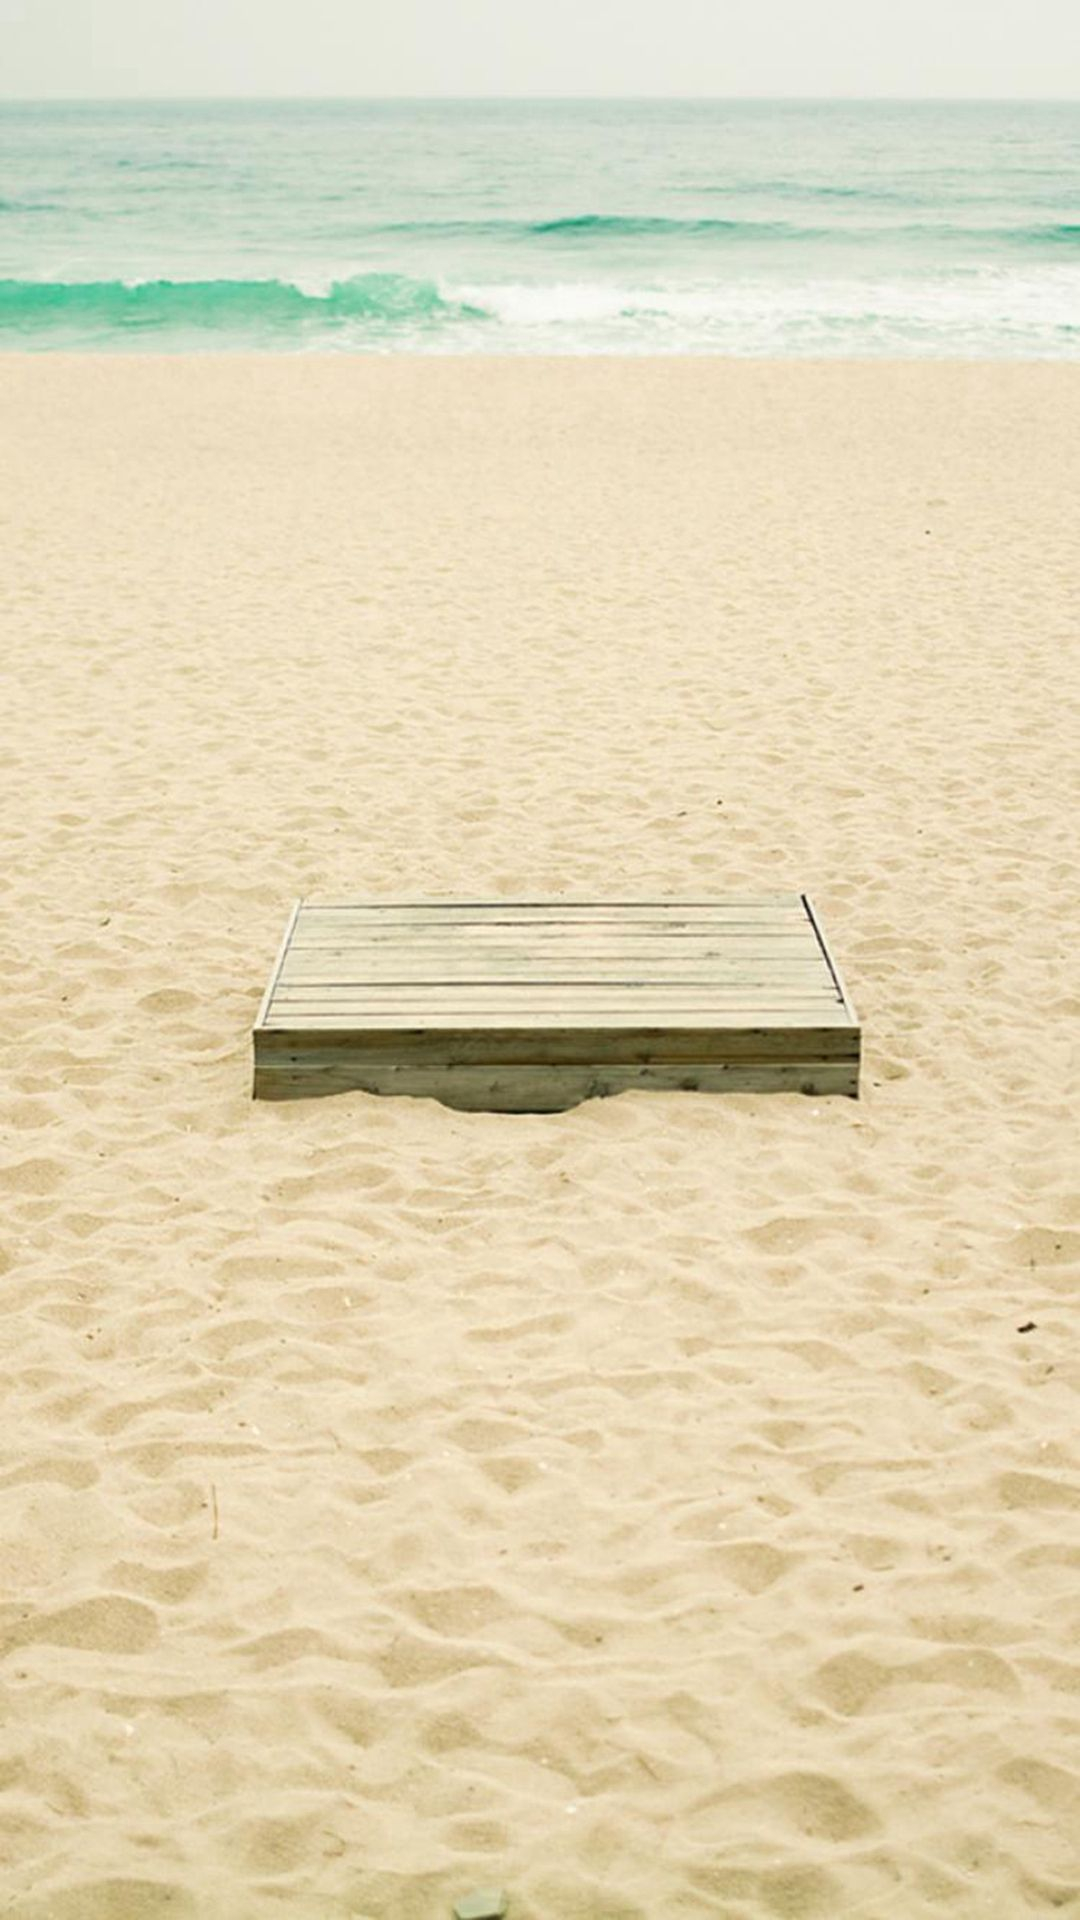 1080x1920 Pure Summer Beach Wooden Box #iPhone #6 #wallpaper | Beach wallpaper, Beach scenery, Beach